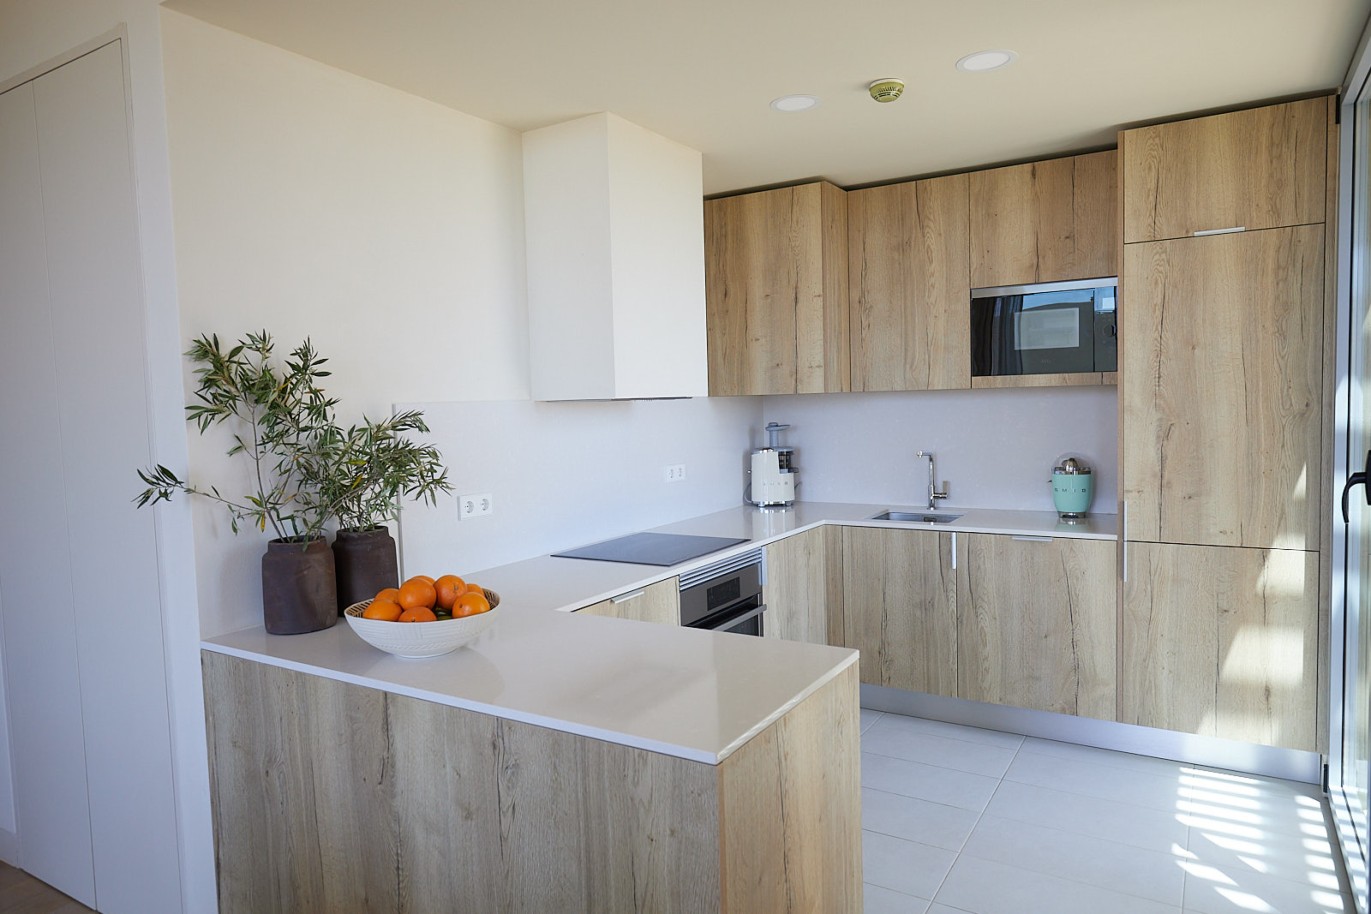 2 bedroom apartment in resort, for sale in Porches, Algarve_230596